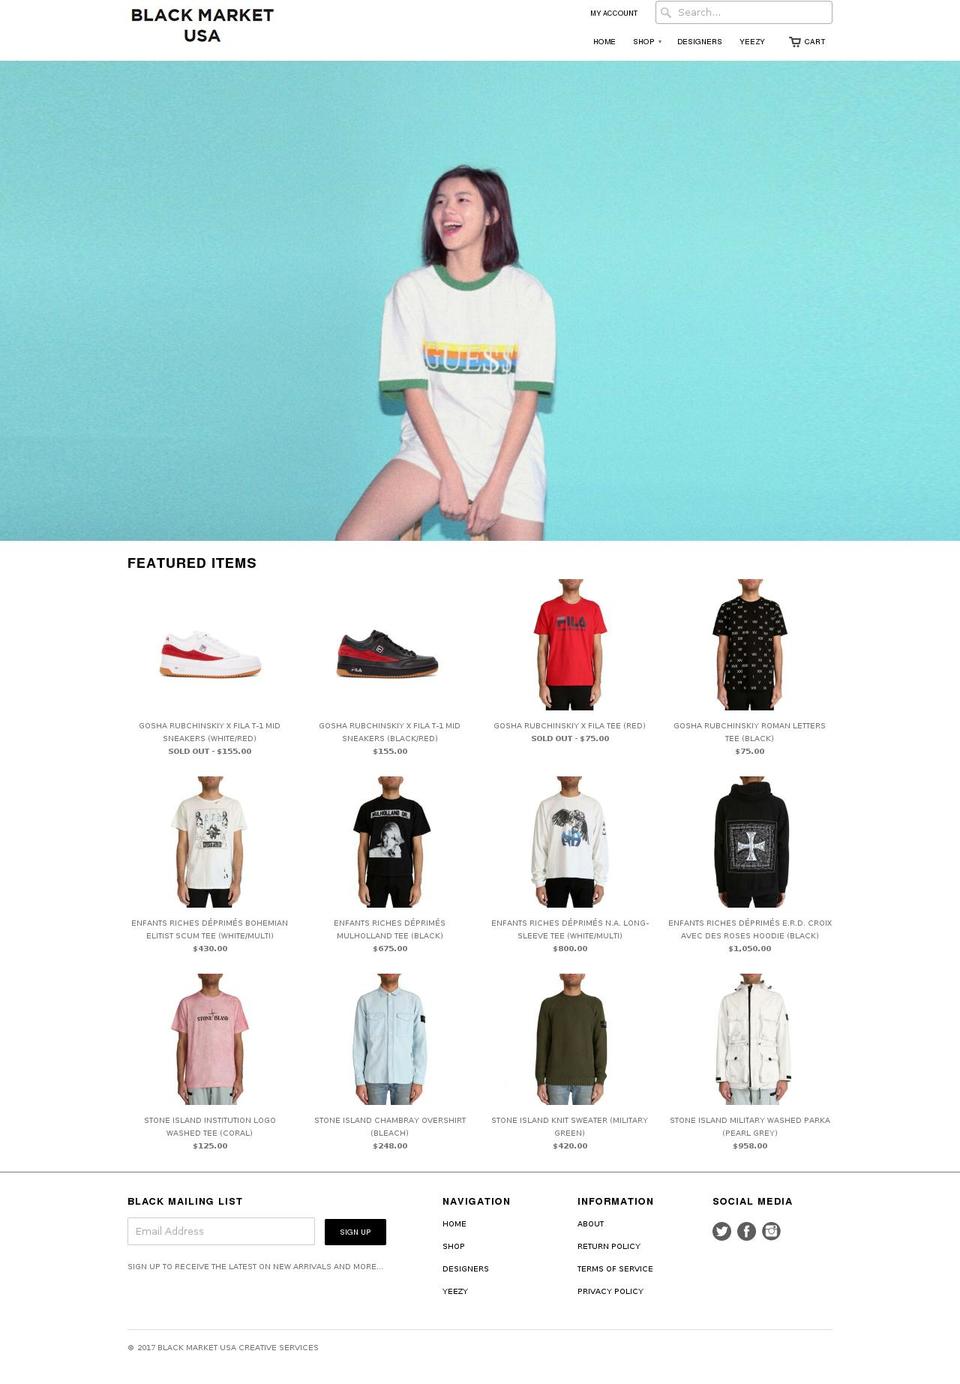 blkmkt.us shopify website screenshot